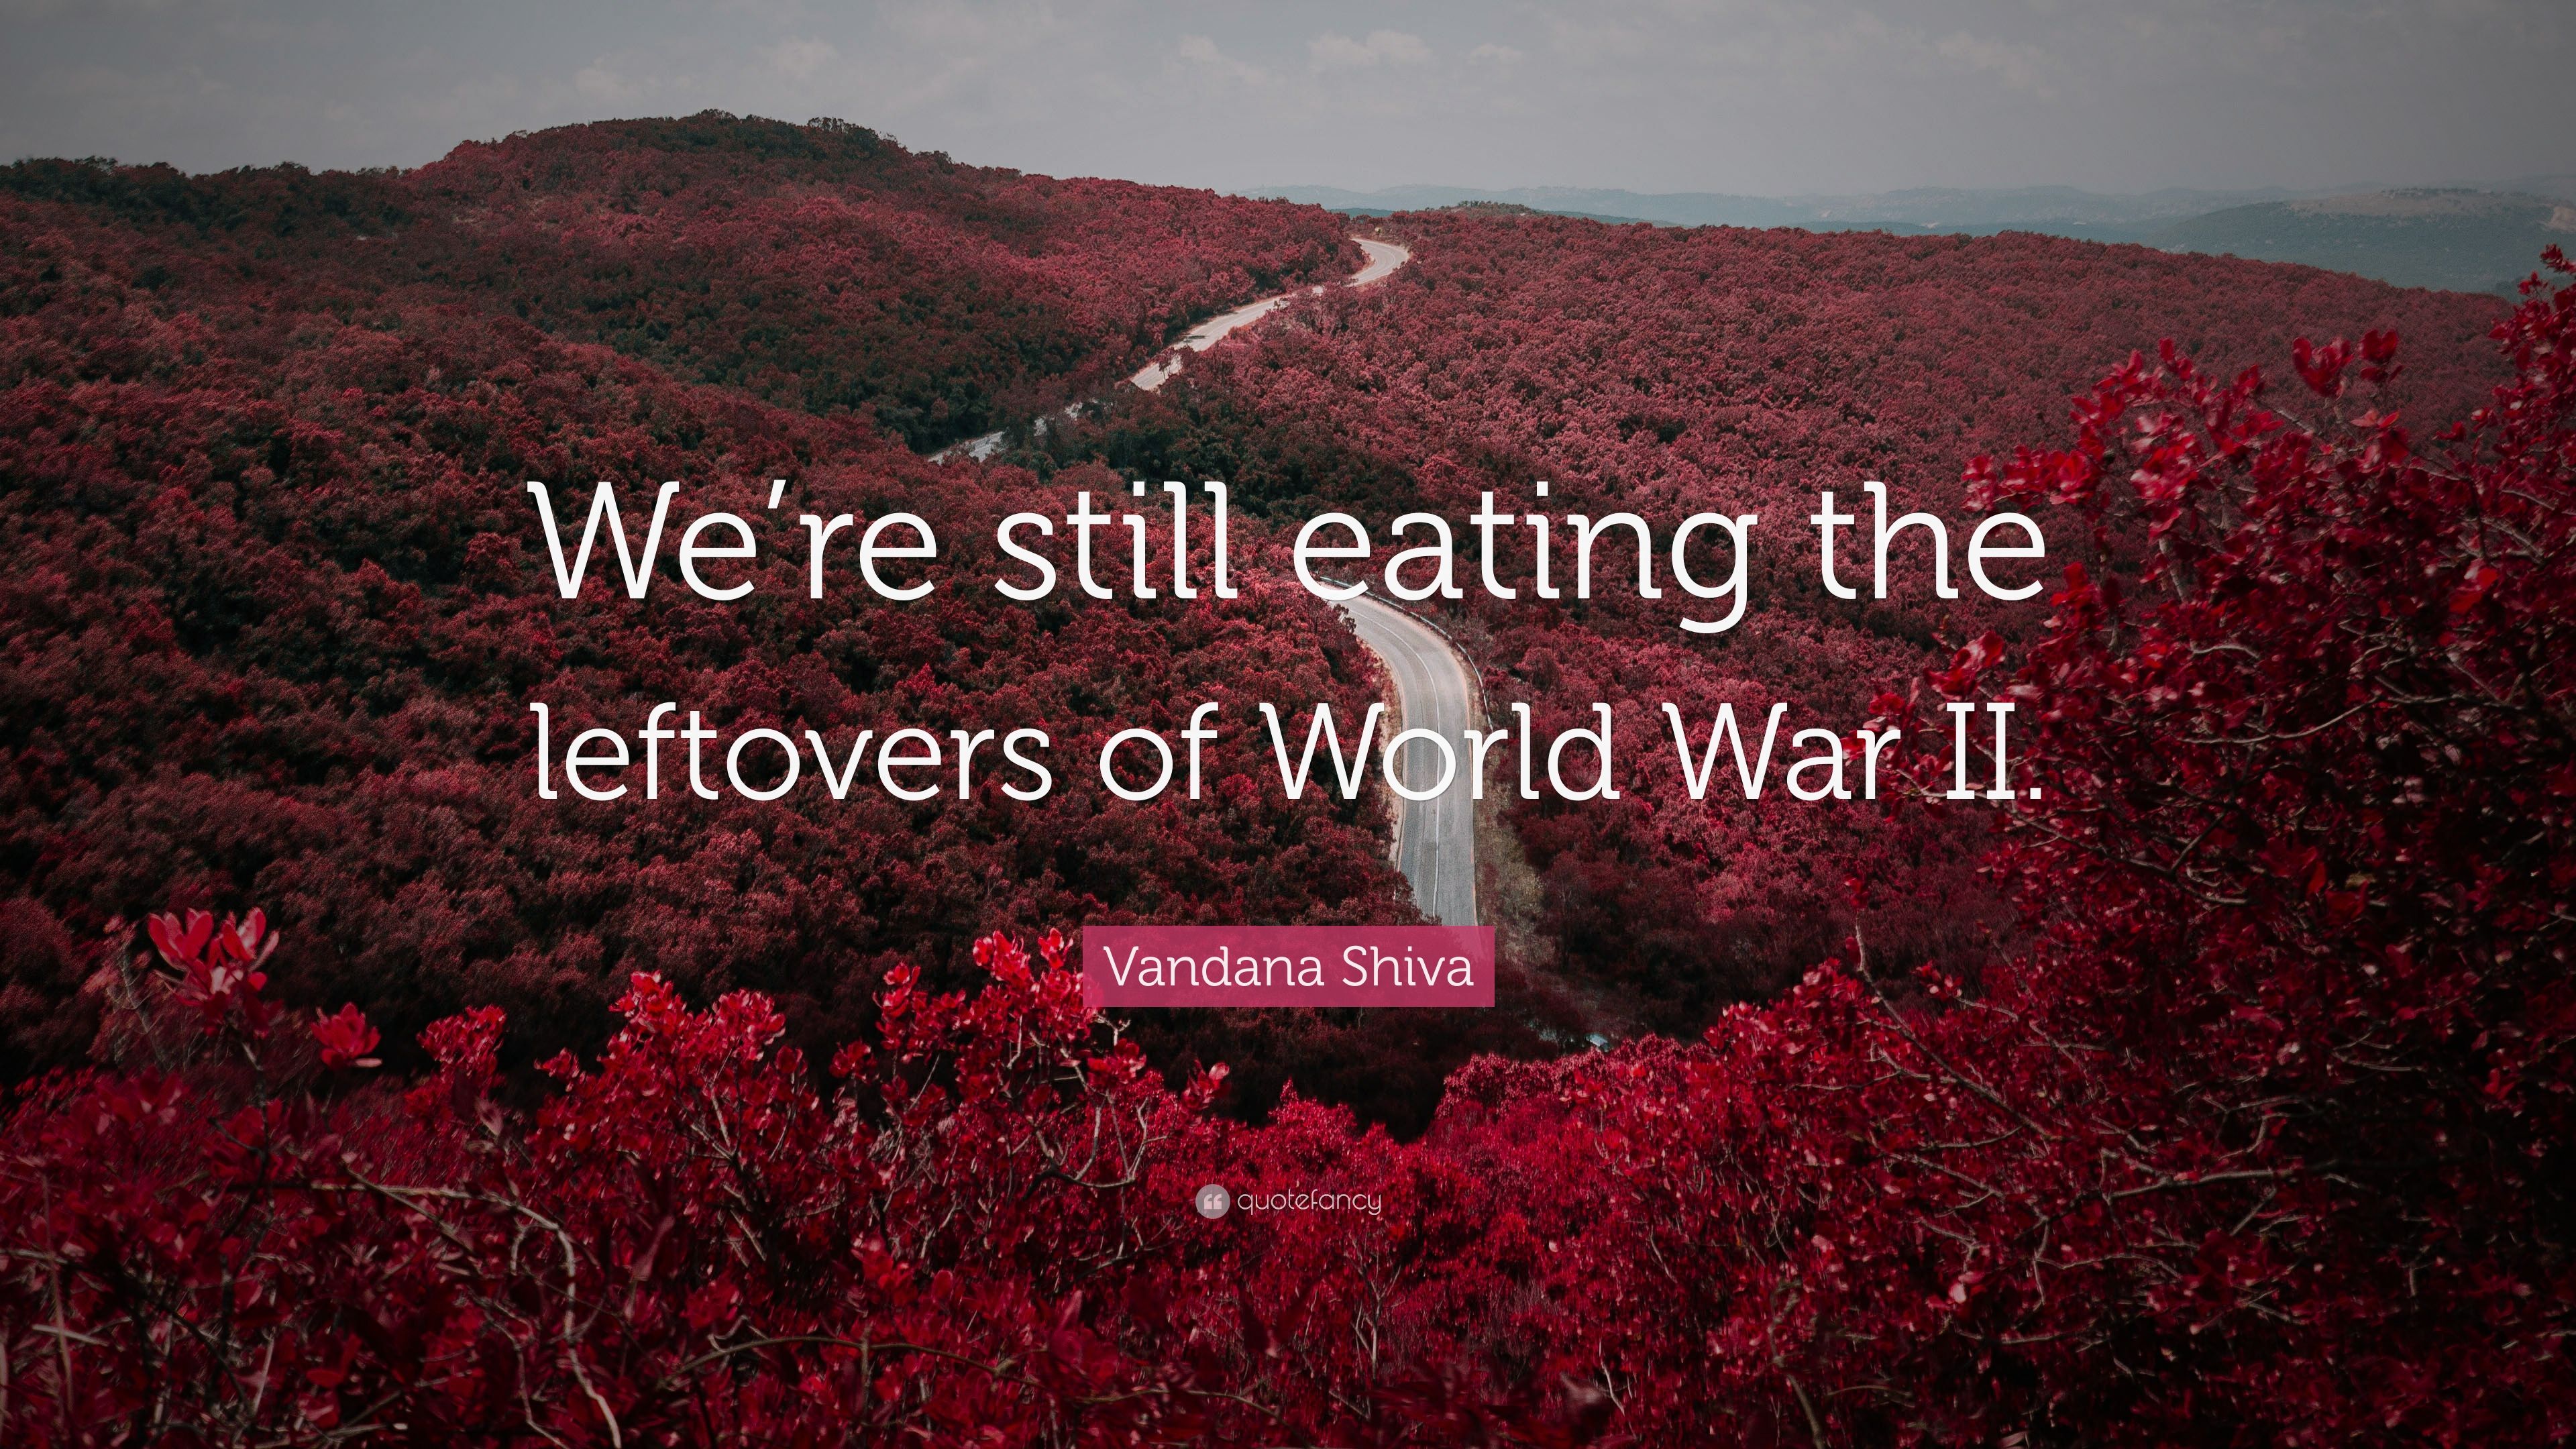 Vandana Shiva Quote: “We're still eating the leftovers of World